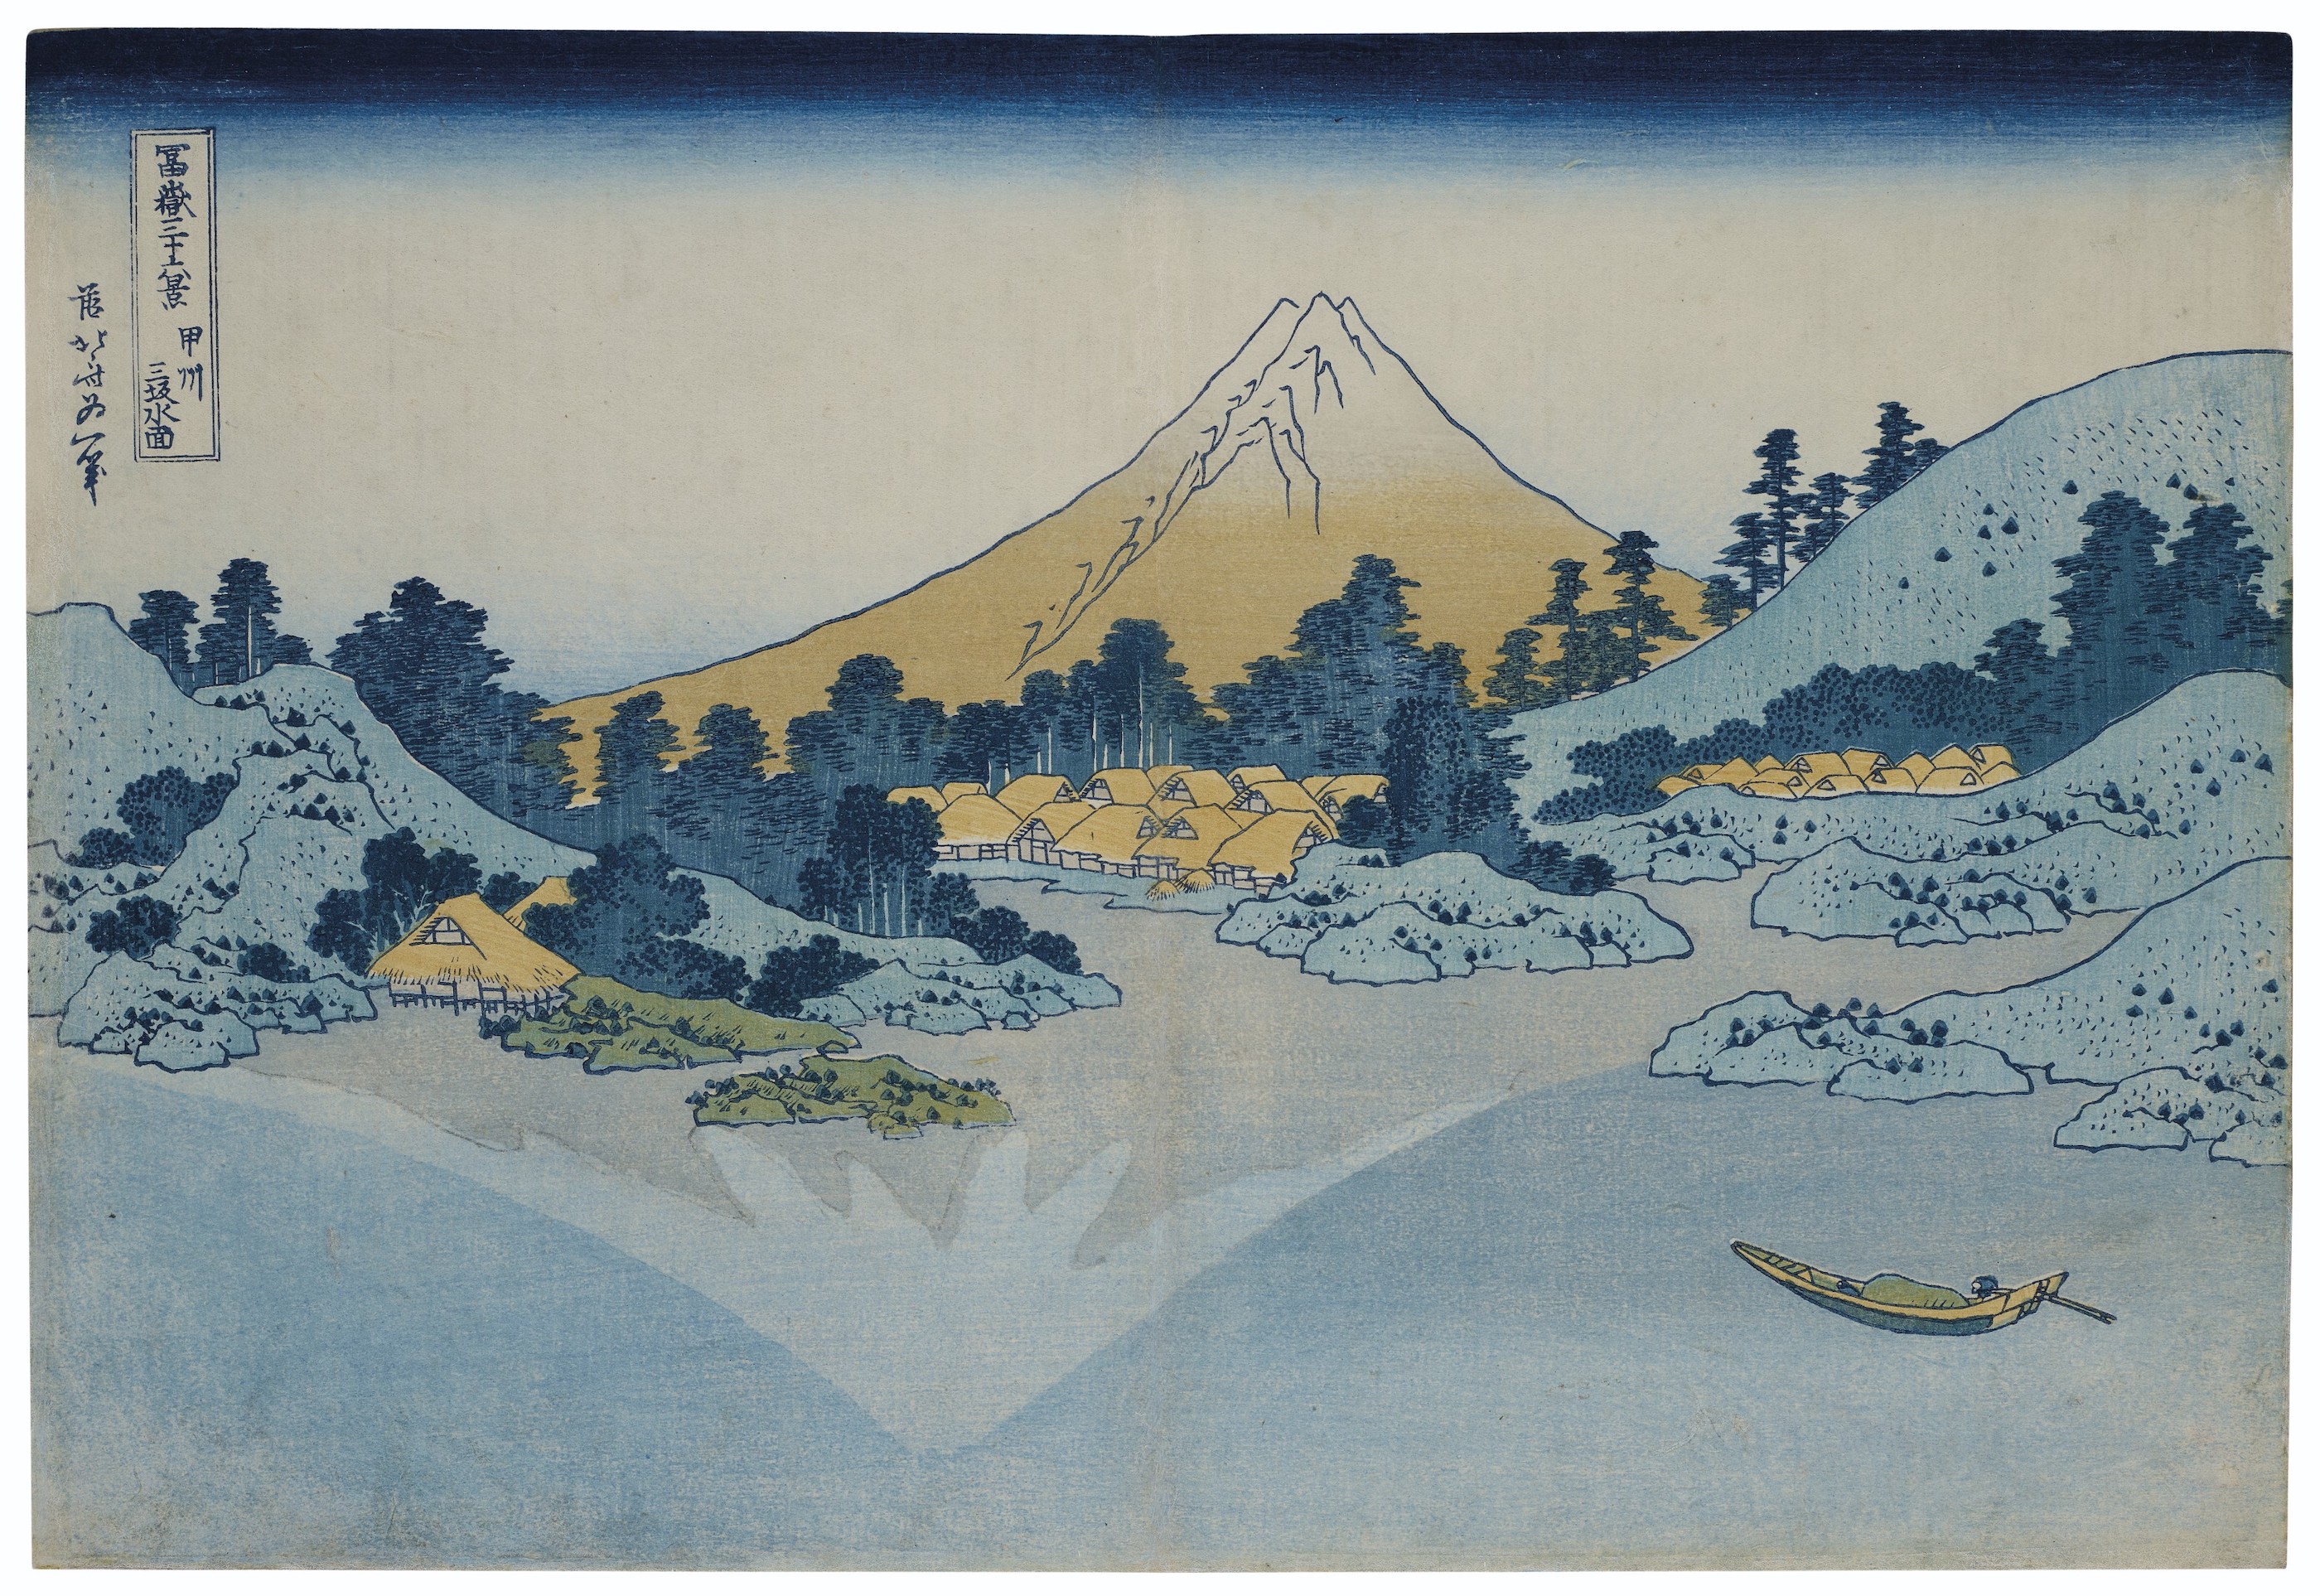 Surface of Lake Misaka, Kai Province by Katsushika Hokusai - c. 1830-32 - 25.4 x 37.5 cm private collection